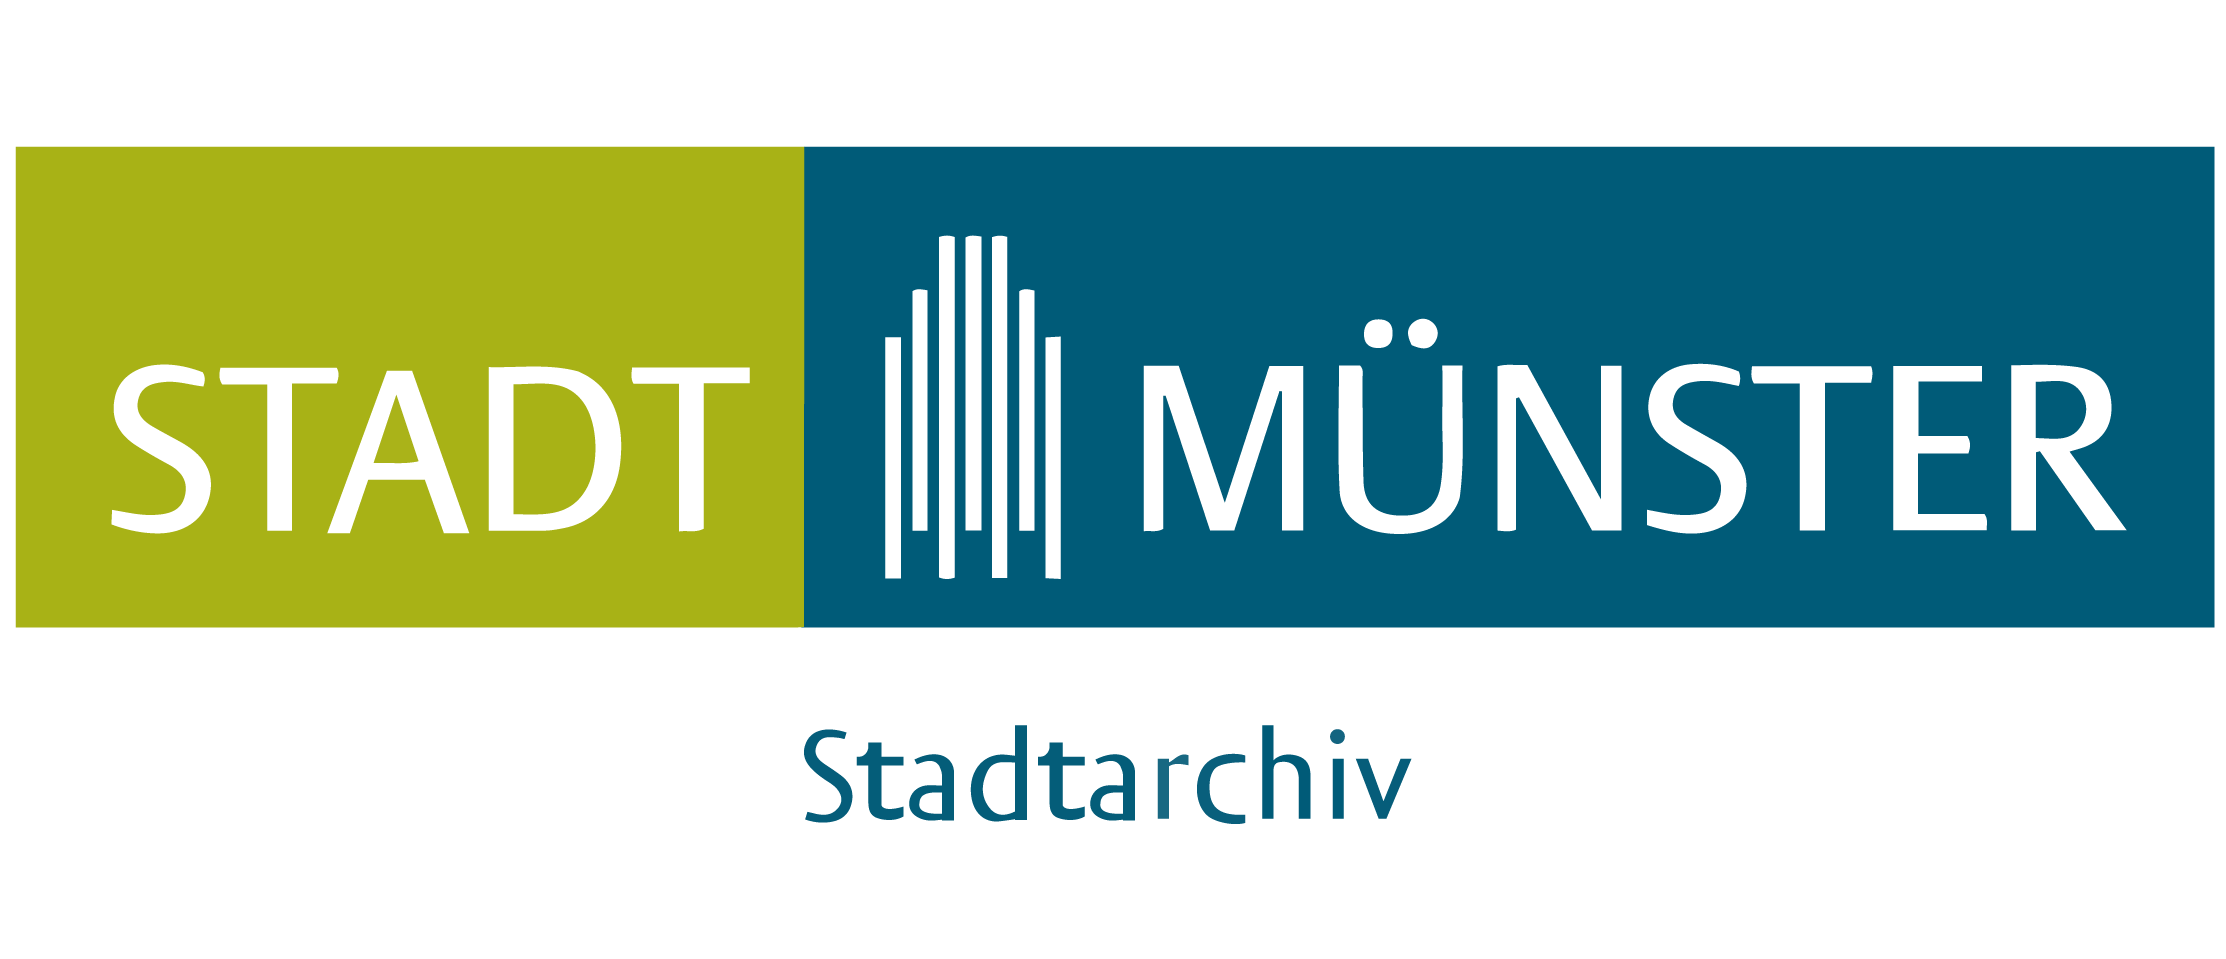 Stadt Münster-stadtarchiv's logo